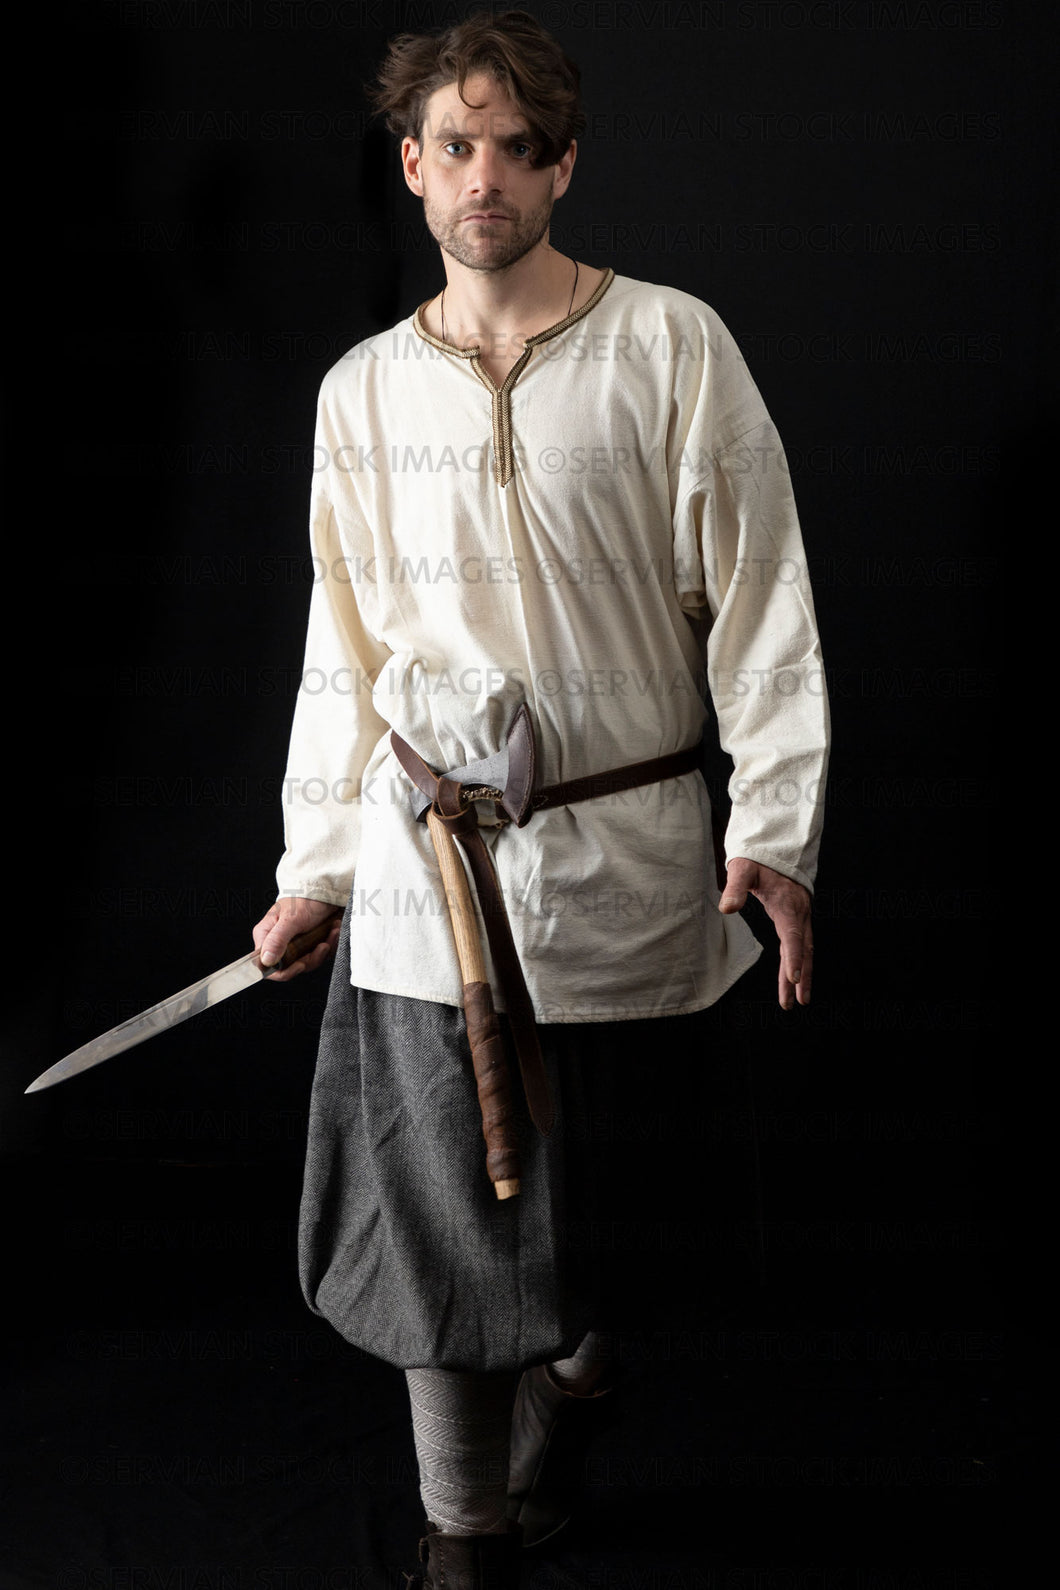 Viking or high fantasy man against a black backdrop (James 1001)